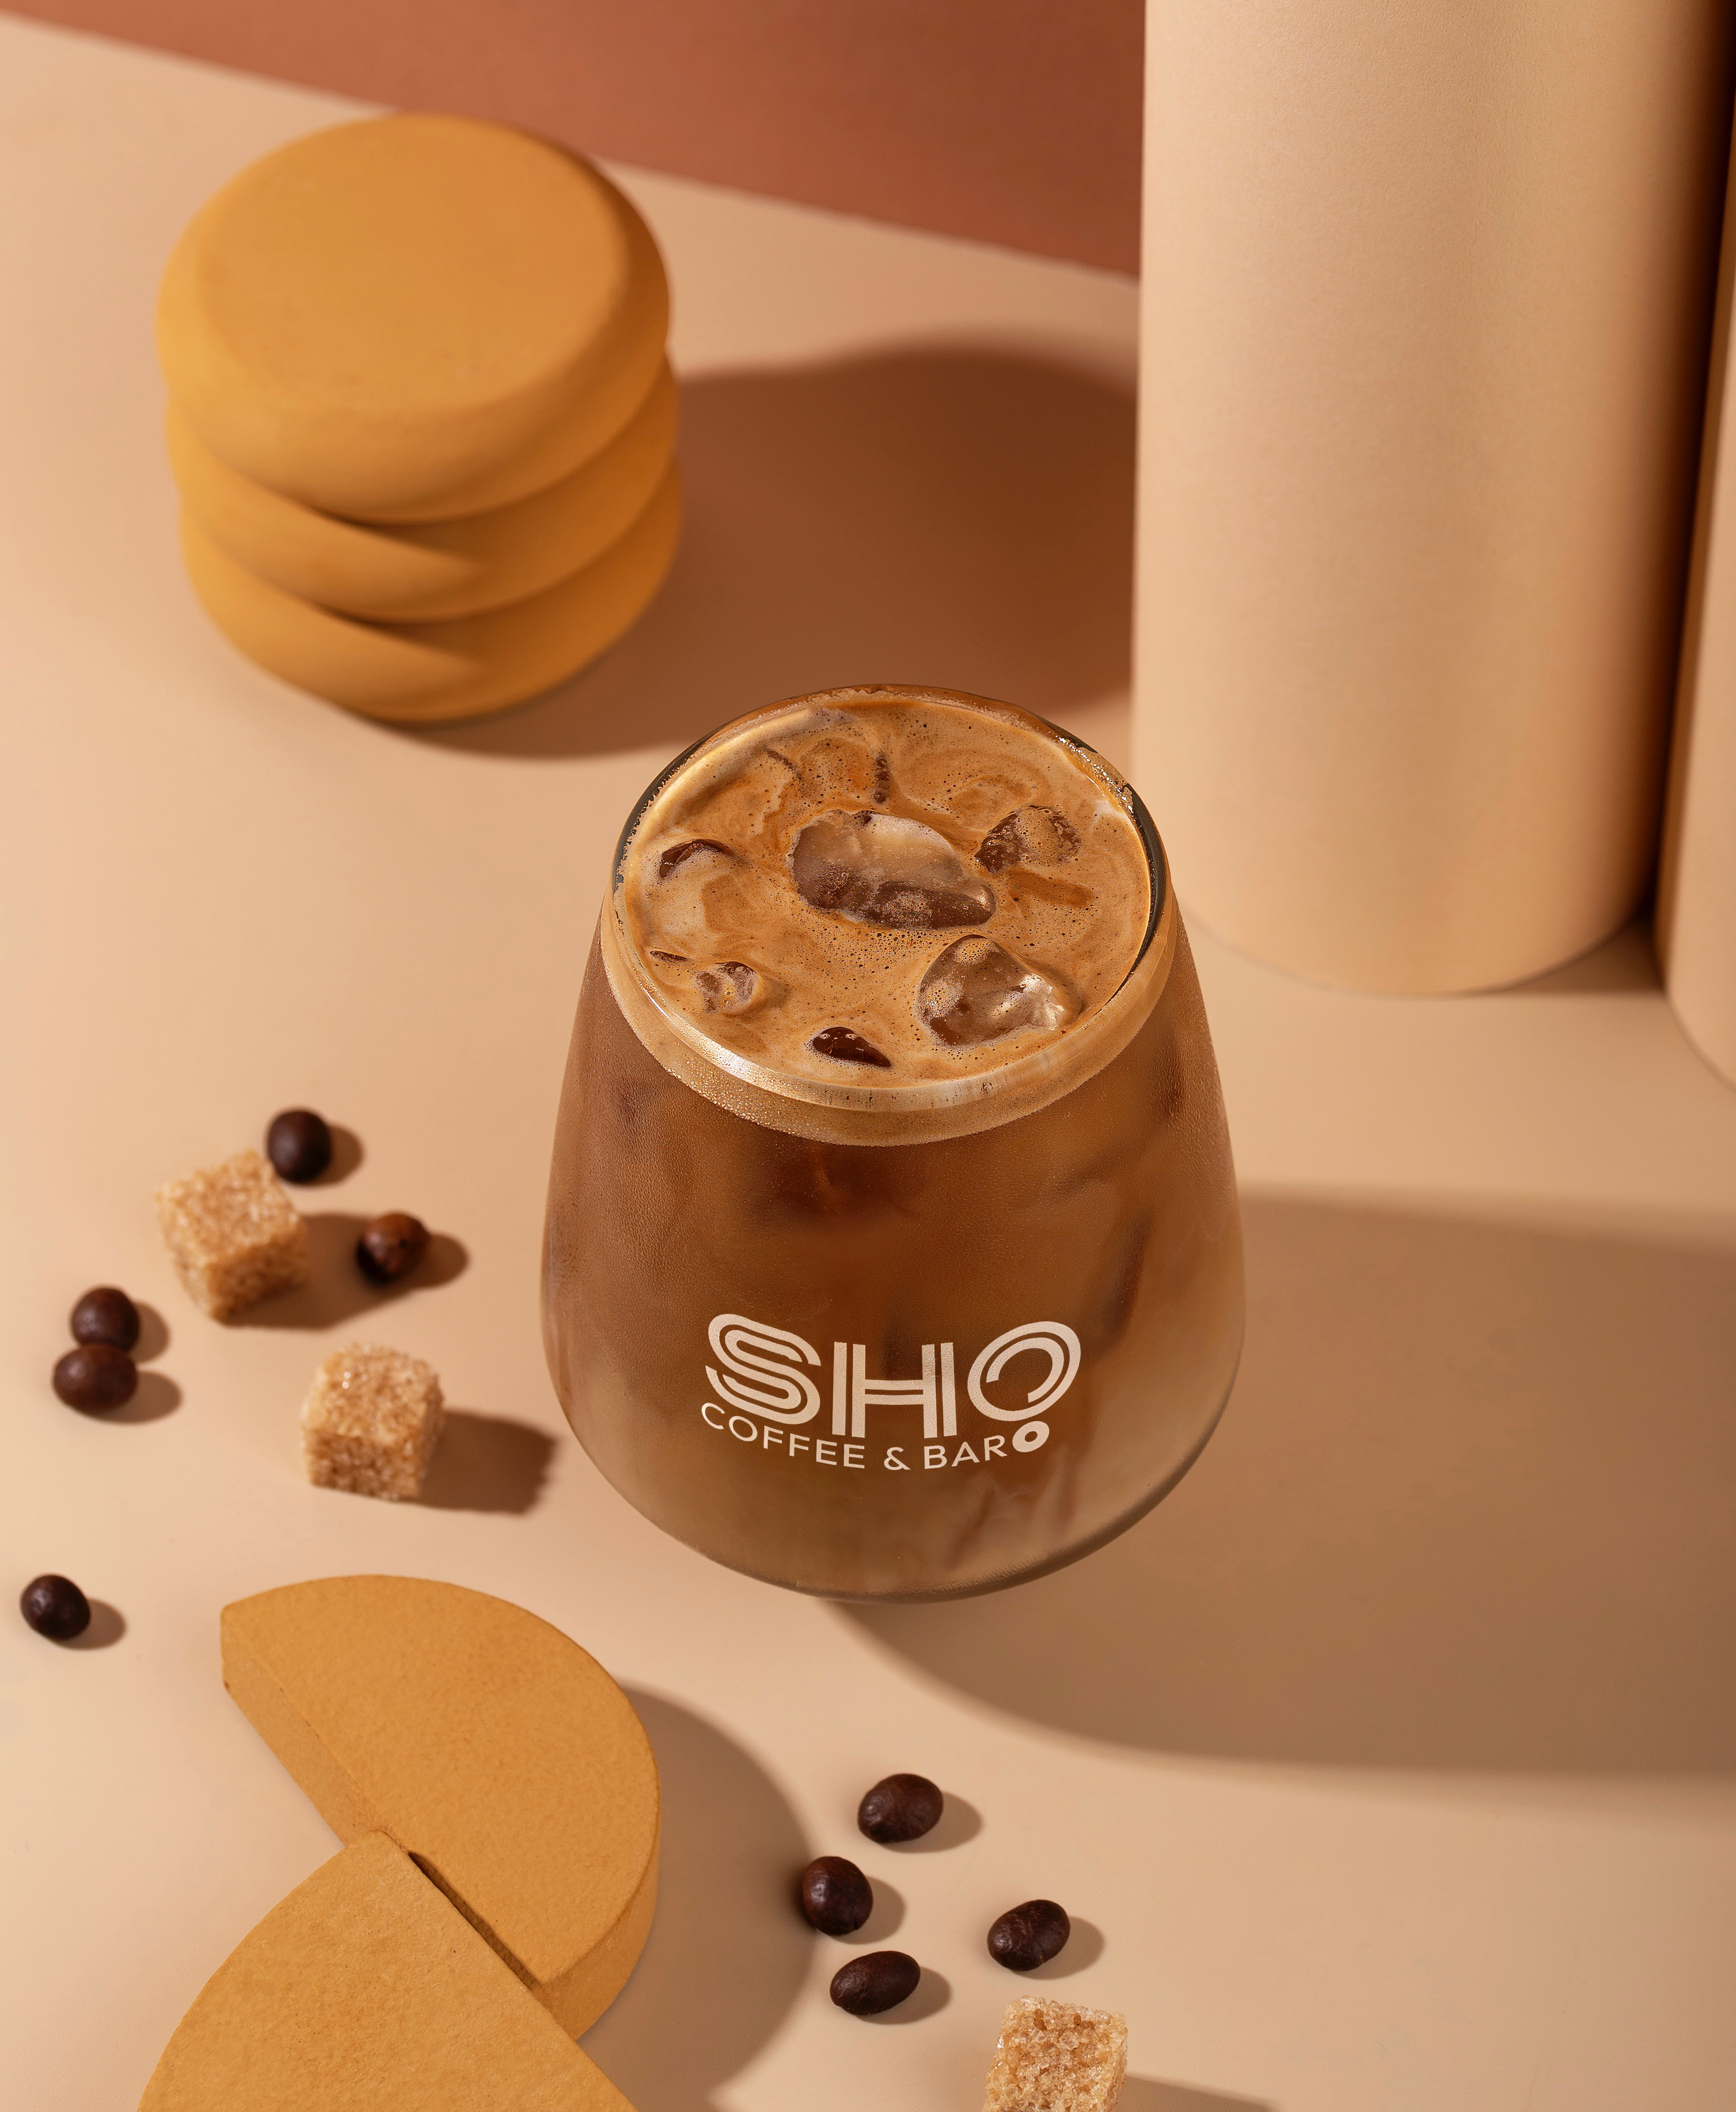 Sho Coffee & Bar